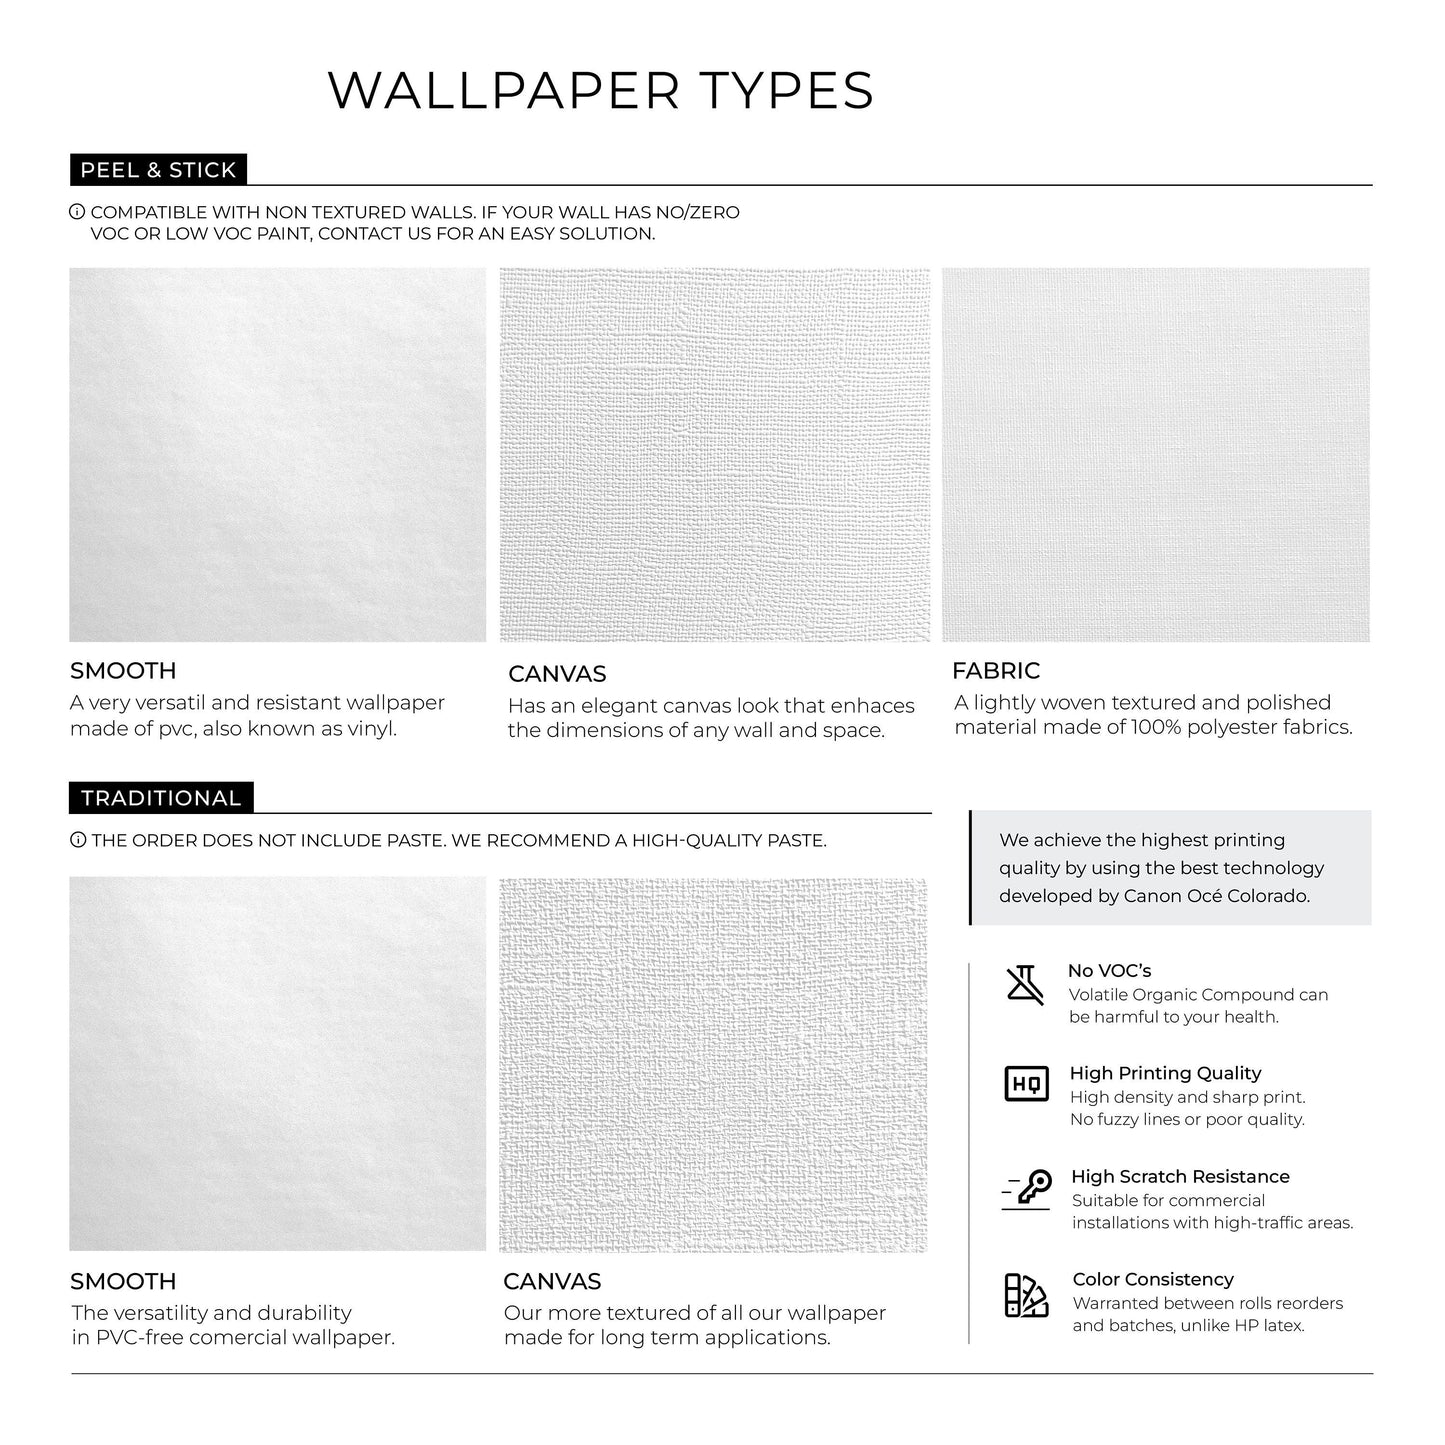 Self-adhesive Removable Wallpaper, Floral Wallpaper, Peel and Stick Fabric Wallpaper, Custom Design Wall, Wallpaper - A403